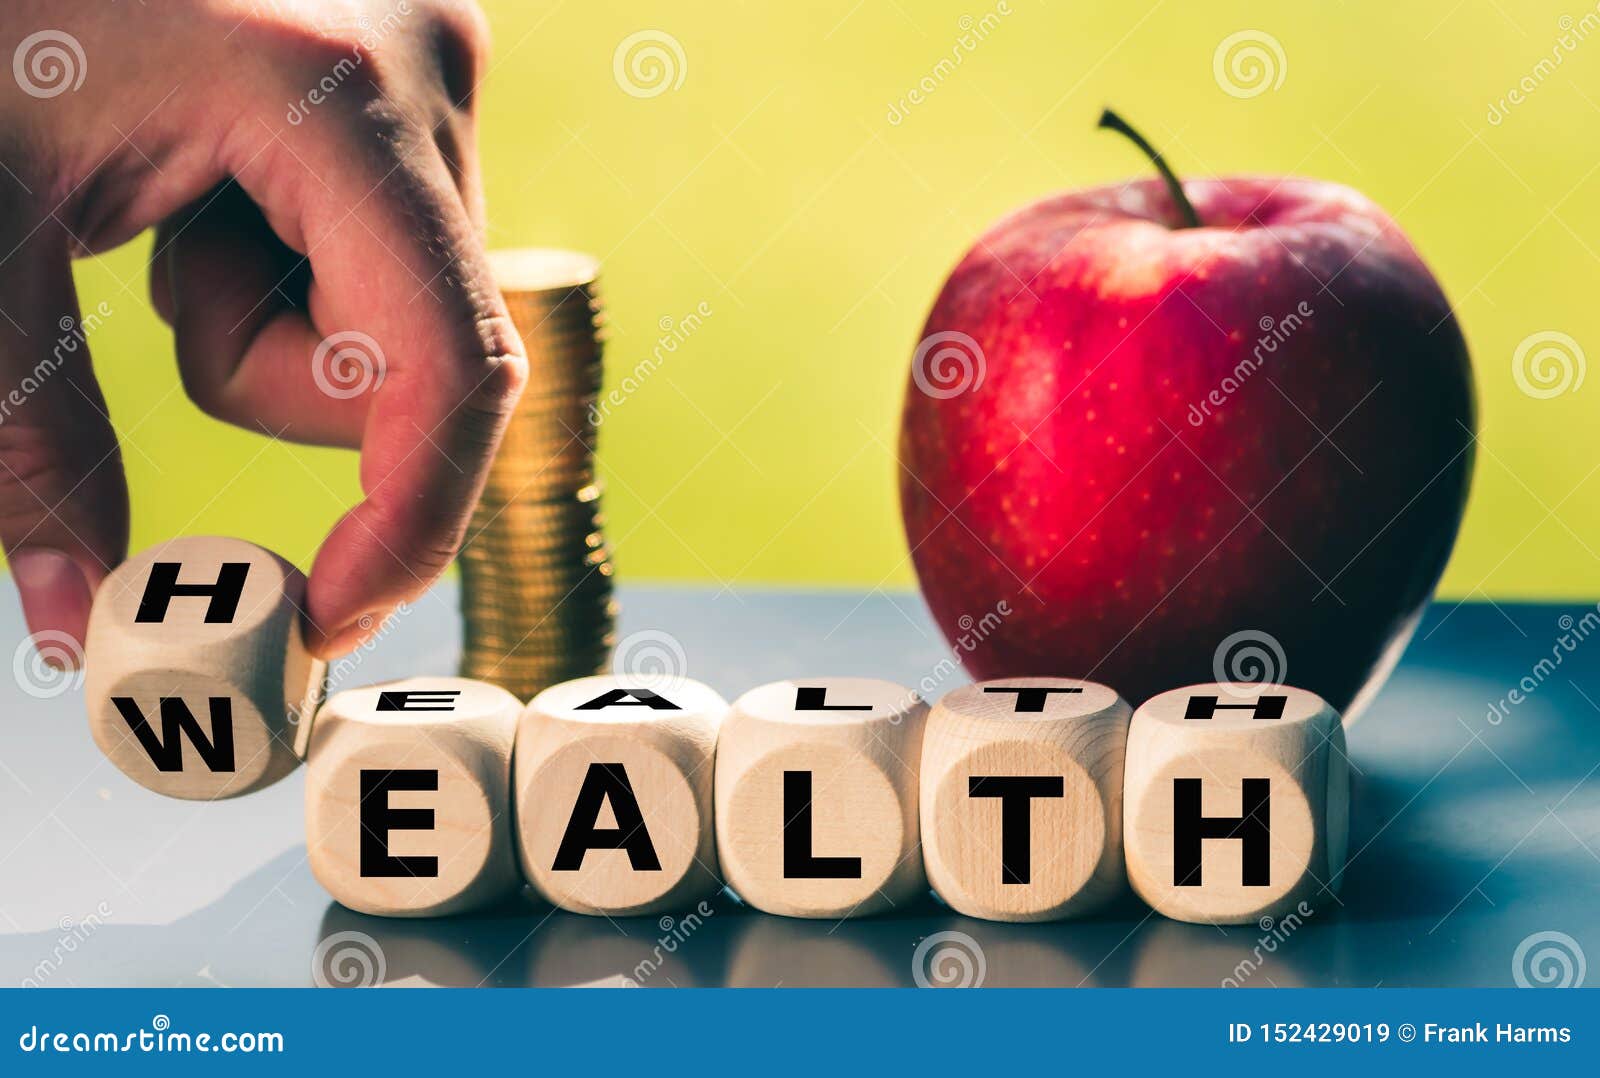 health is wealth documentary